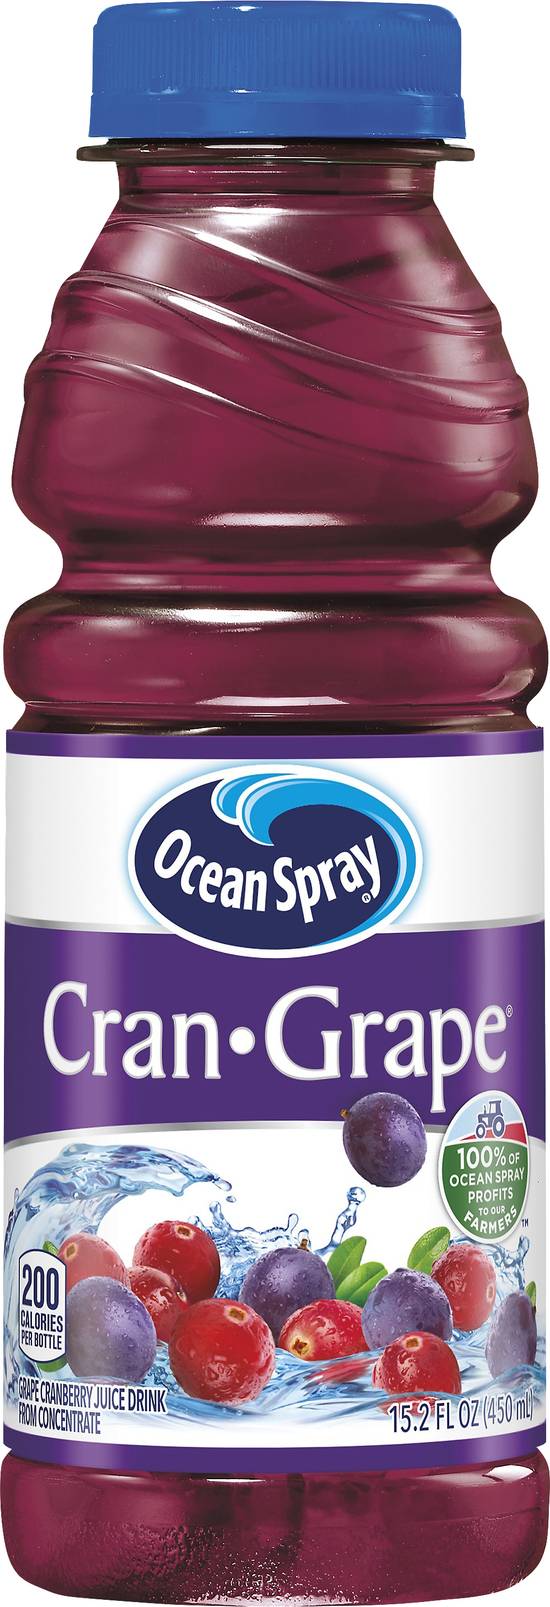 Ocean Spray Grape Cranberry Juice Drink (15.2 fl oz)